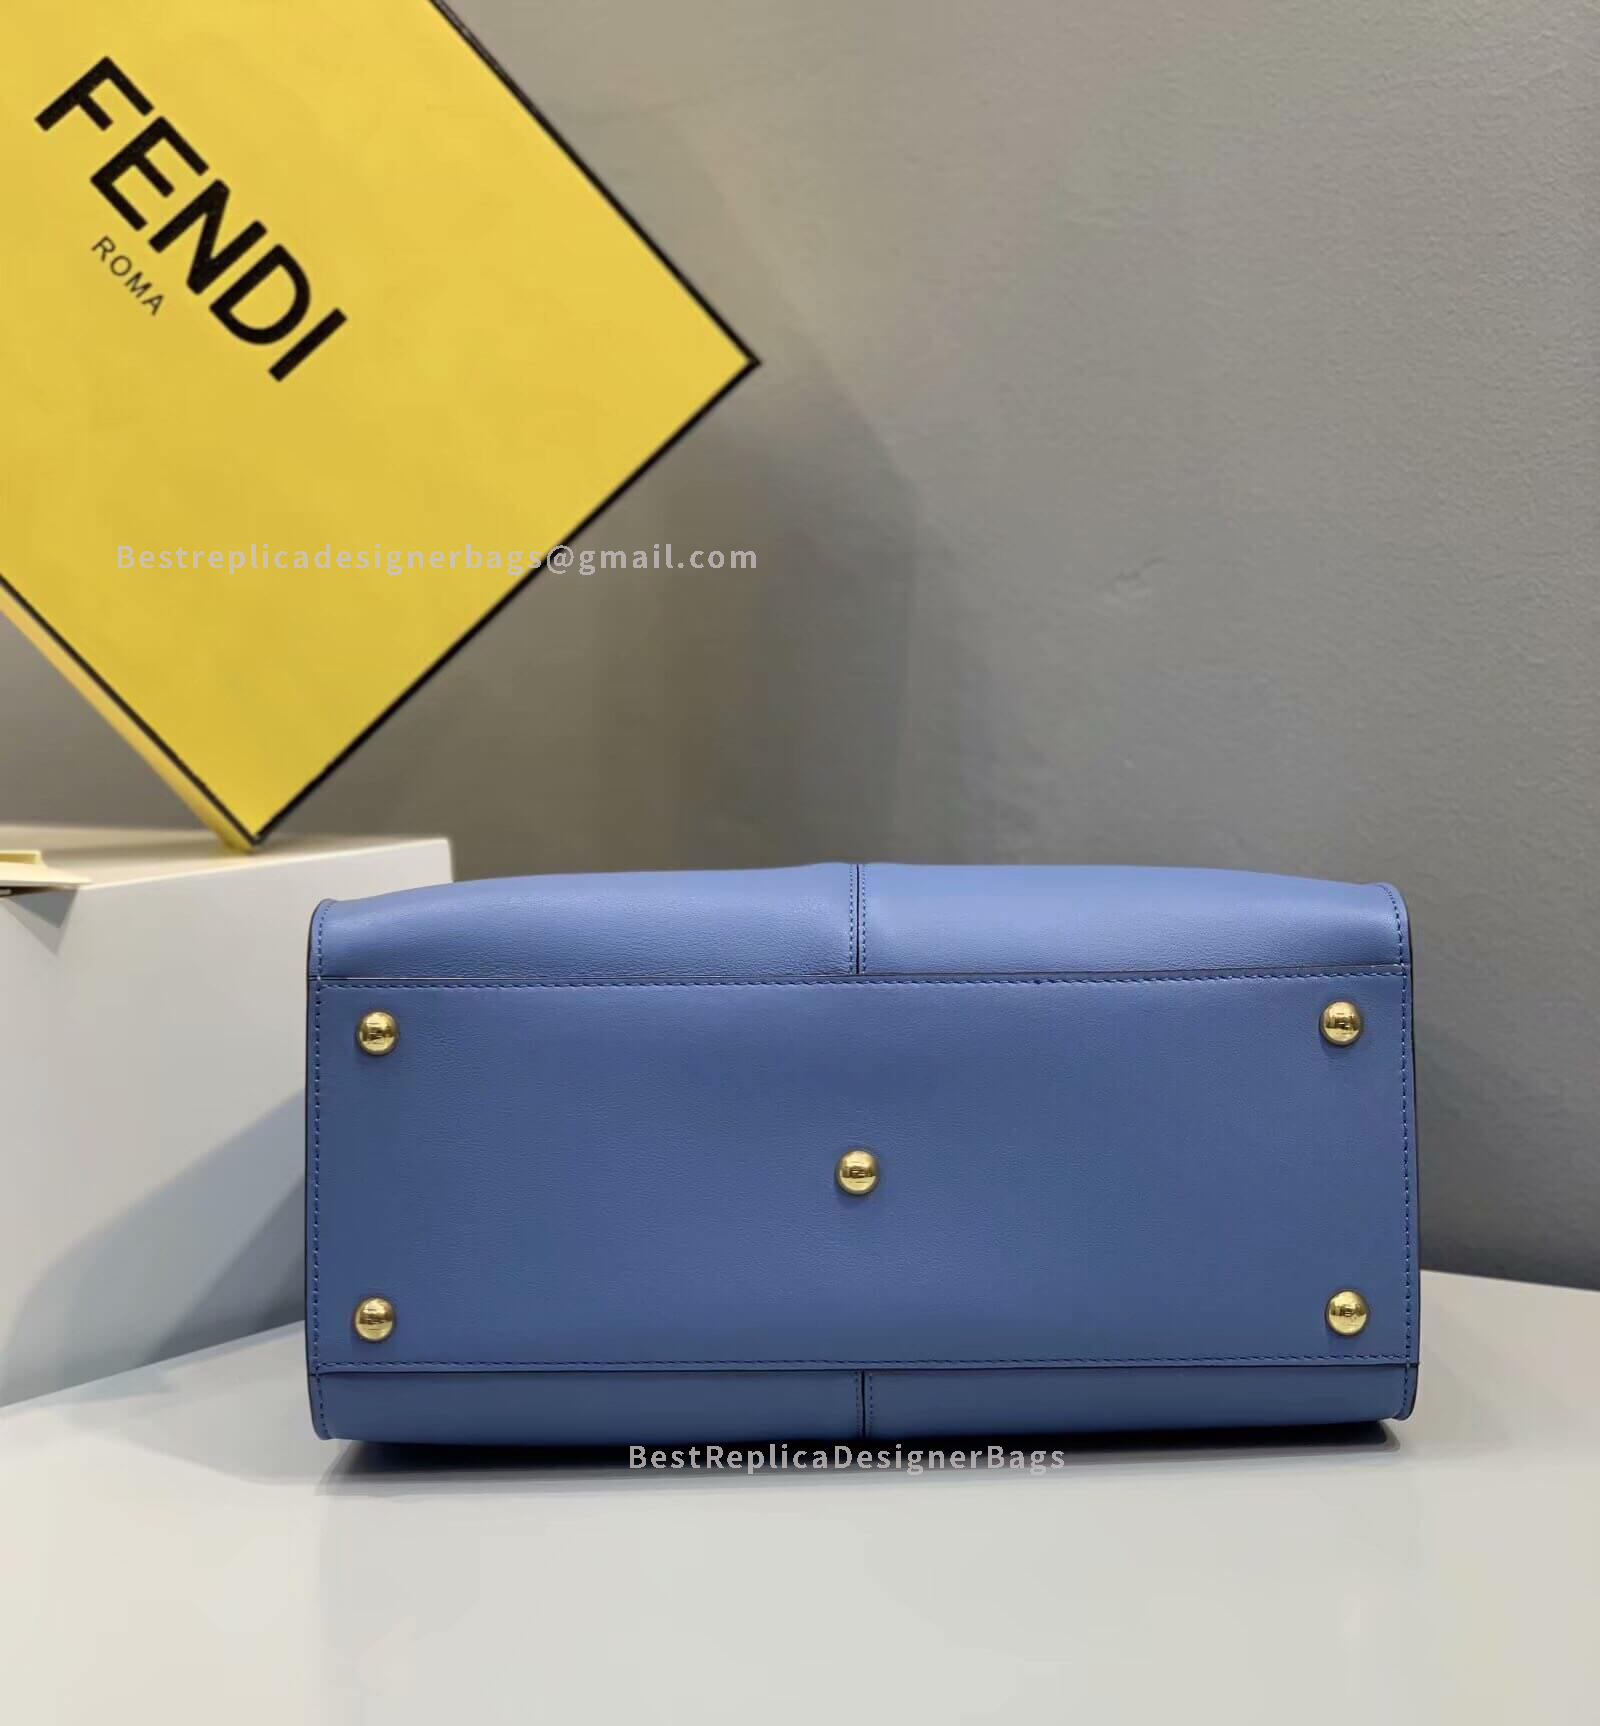 Fendi Peekaboo X-Lite Medium Blue Leather Bag 304S - Best Fendi Replica